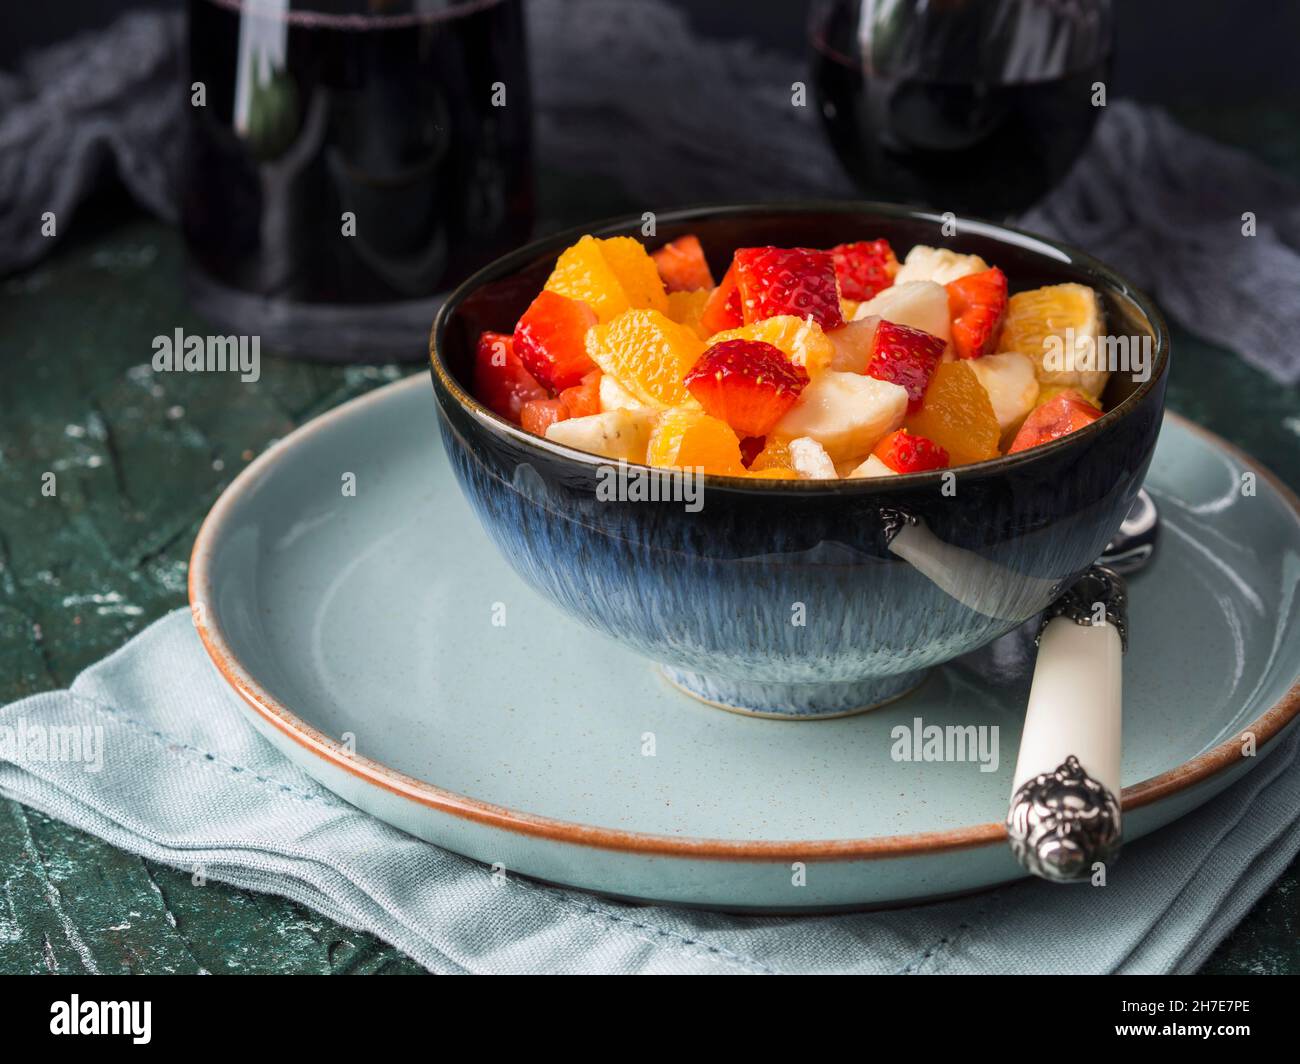 Fruit macedonia salad with strawberries, oranges and banana with lemon juice, brown sugar and orange liqueur Stock Photo